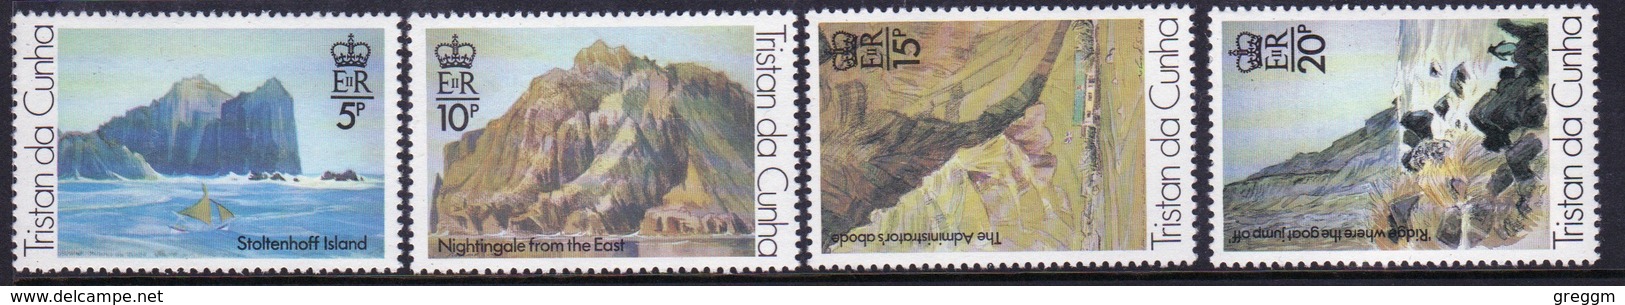 Tristan Da Cunha 1980 Set Of Stamps To Celebrate Paintings 3rd Series. - Tristan Da Cunha